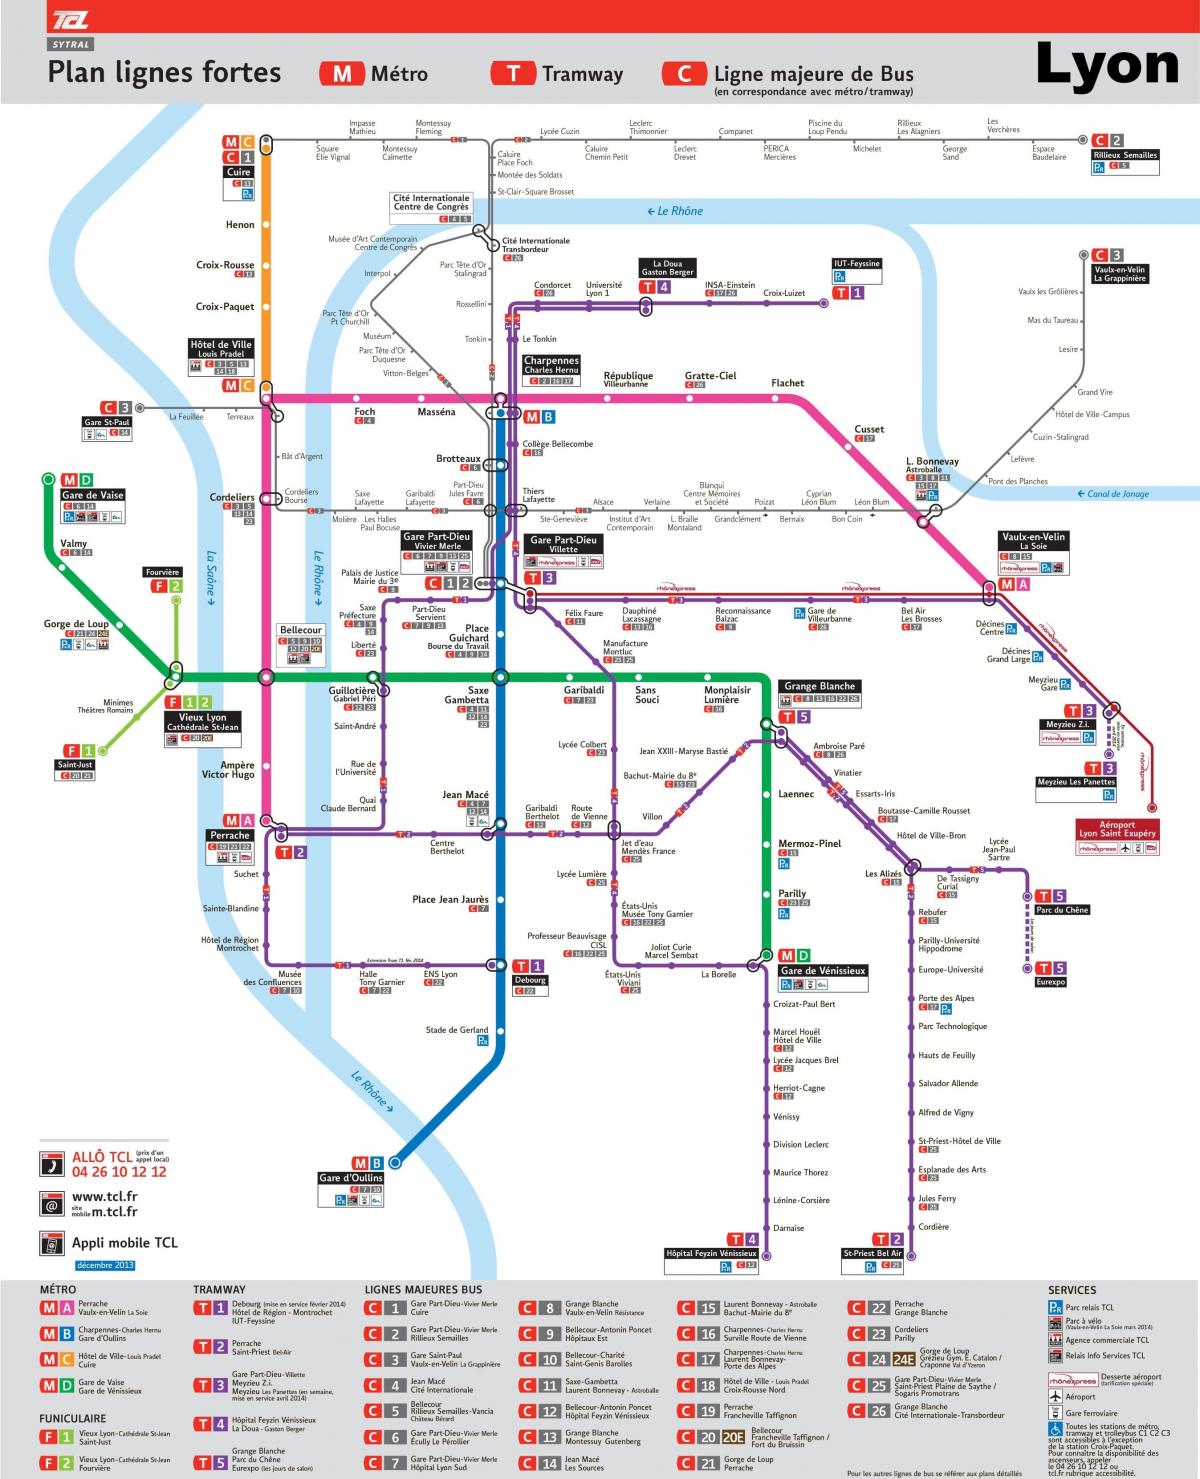 Лион транспортную карту в формате PDF